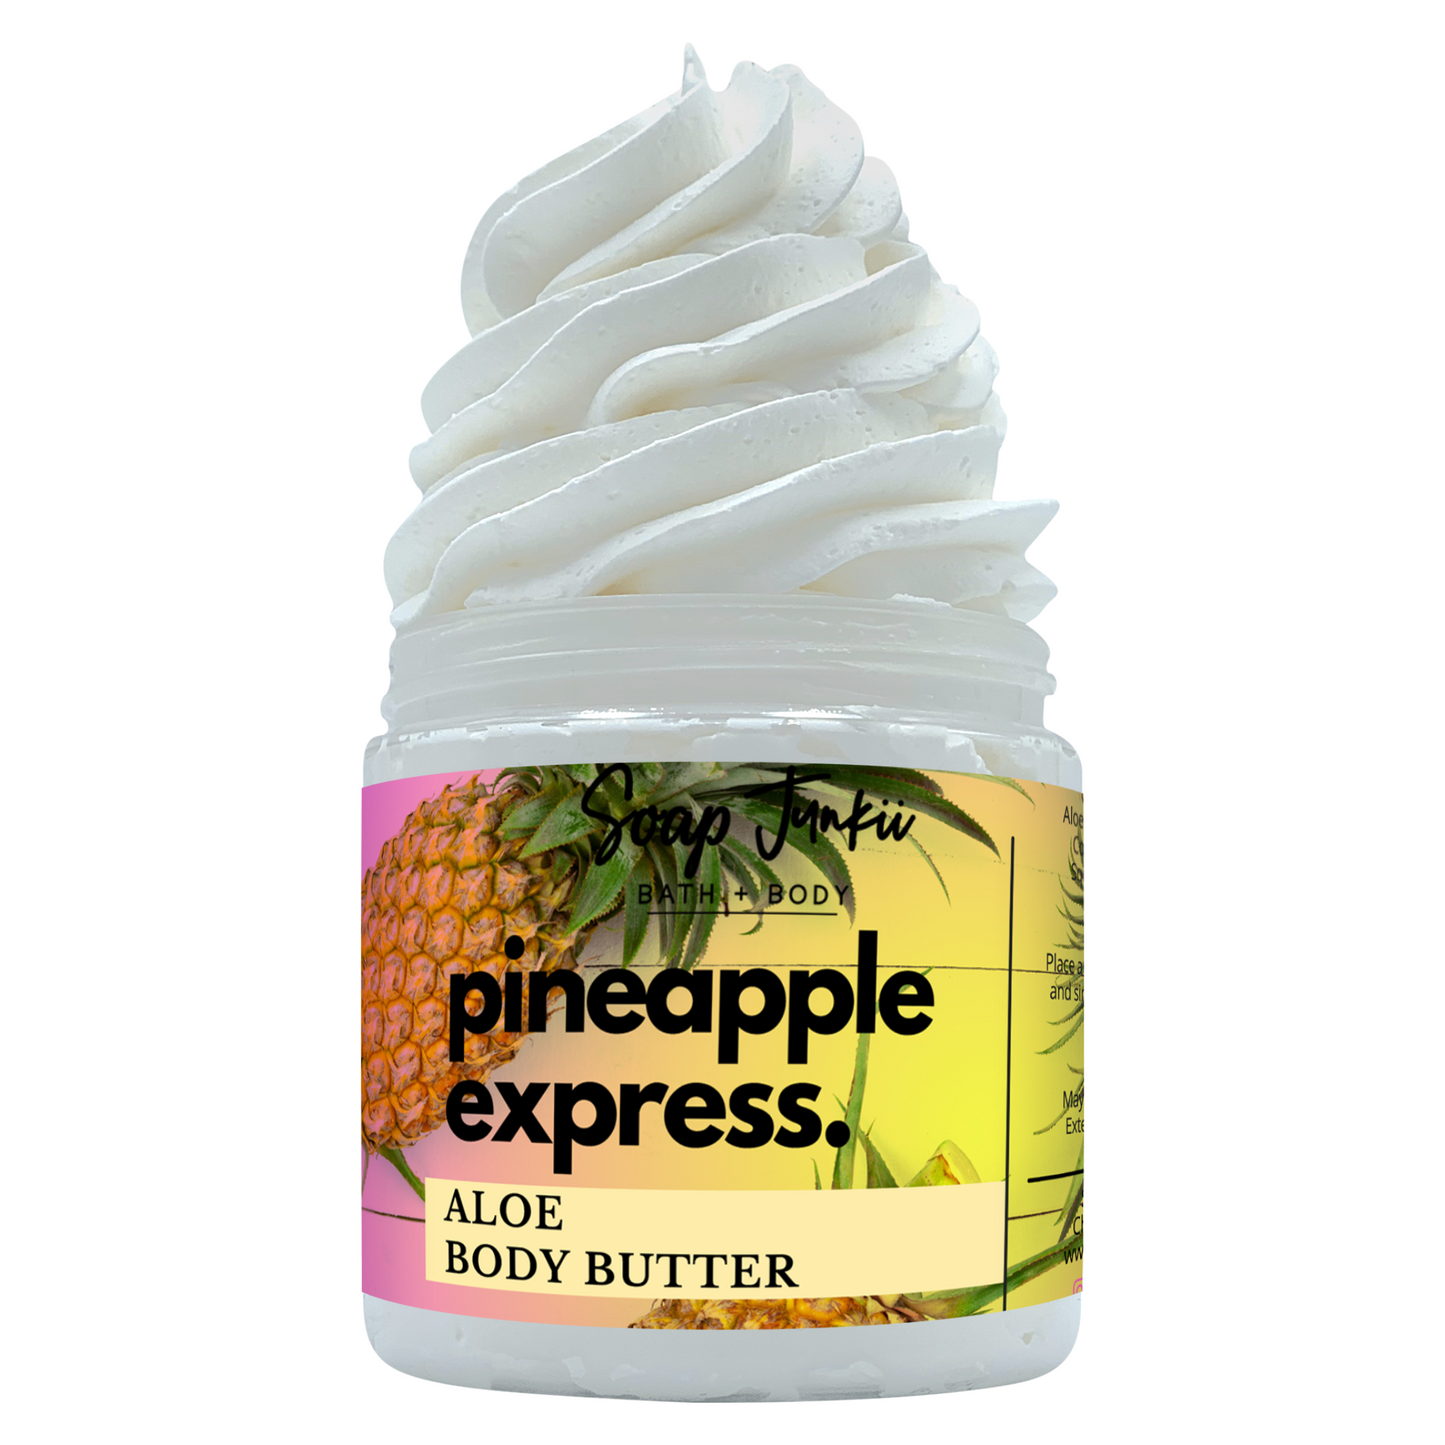 Pineapple Express Aloe Body Butter